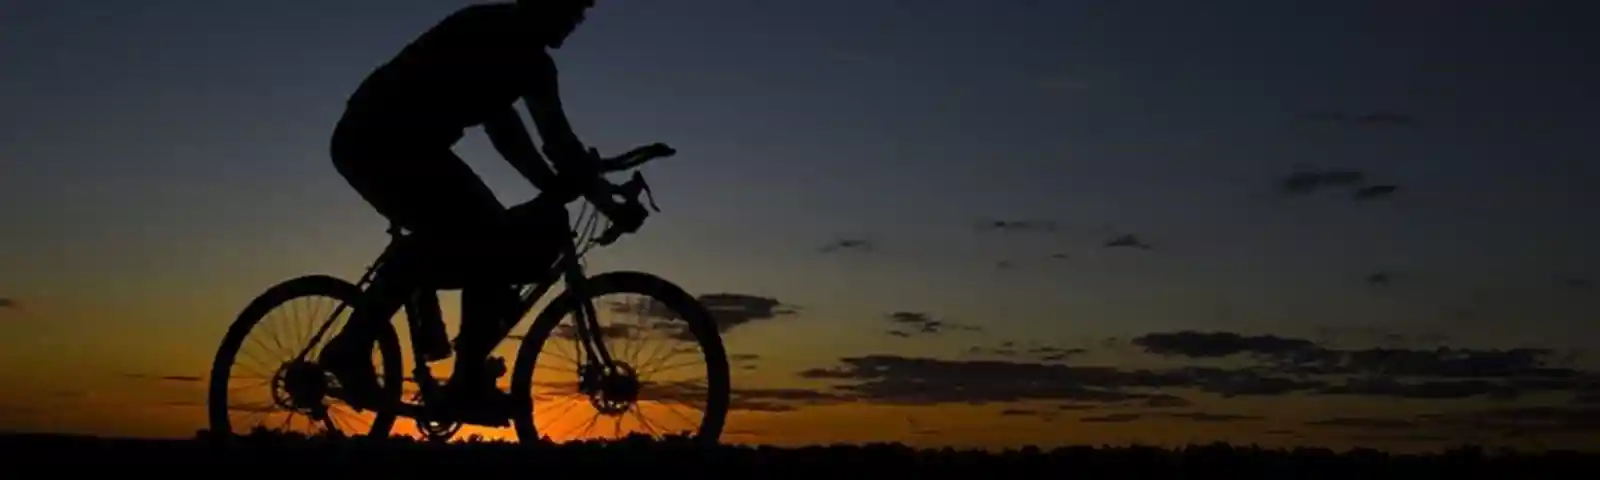 Man with bike during Nightfall